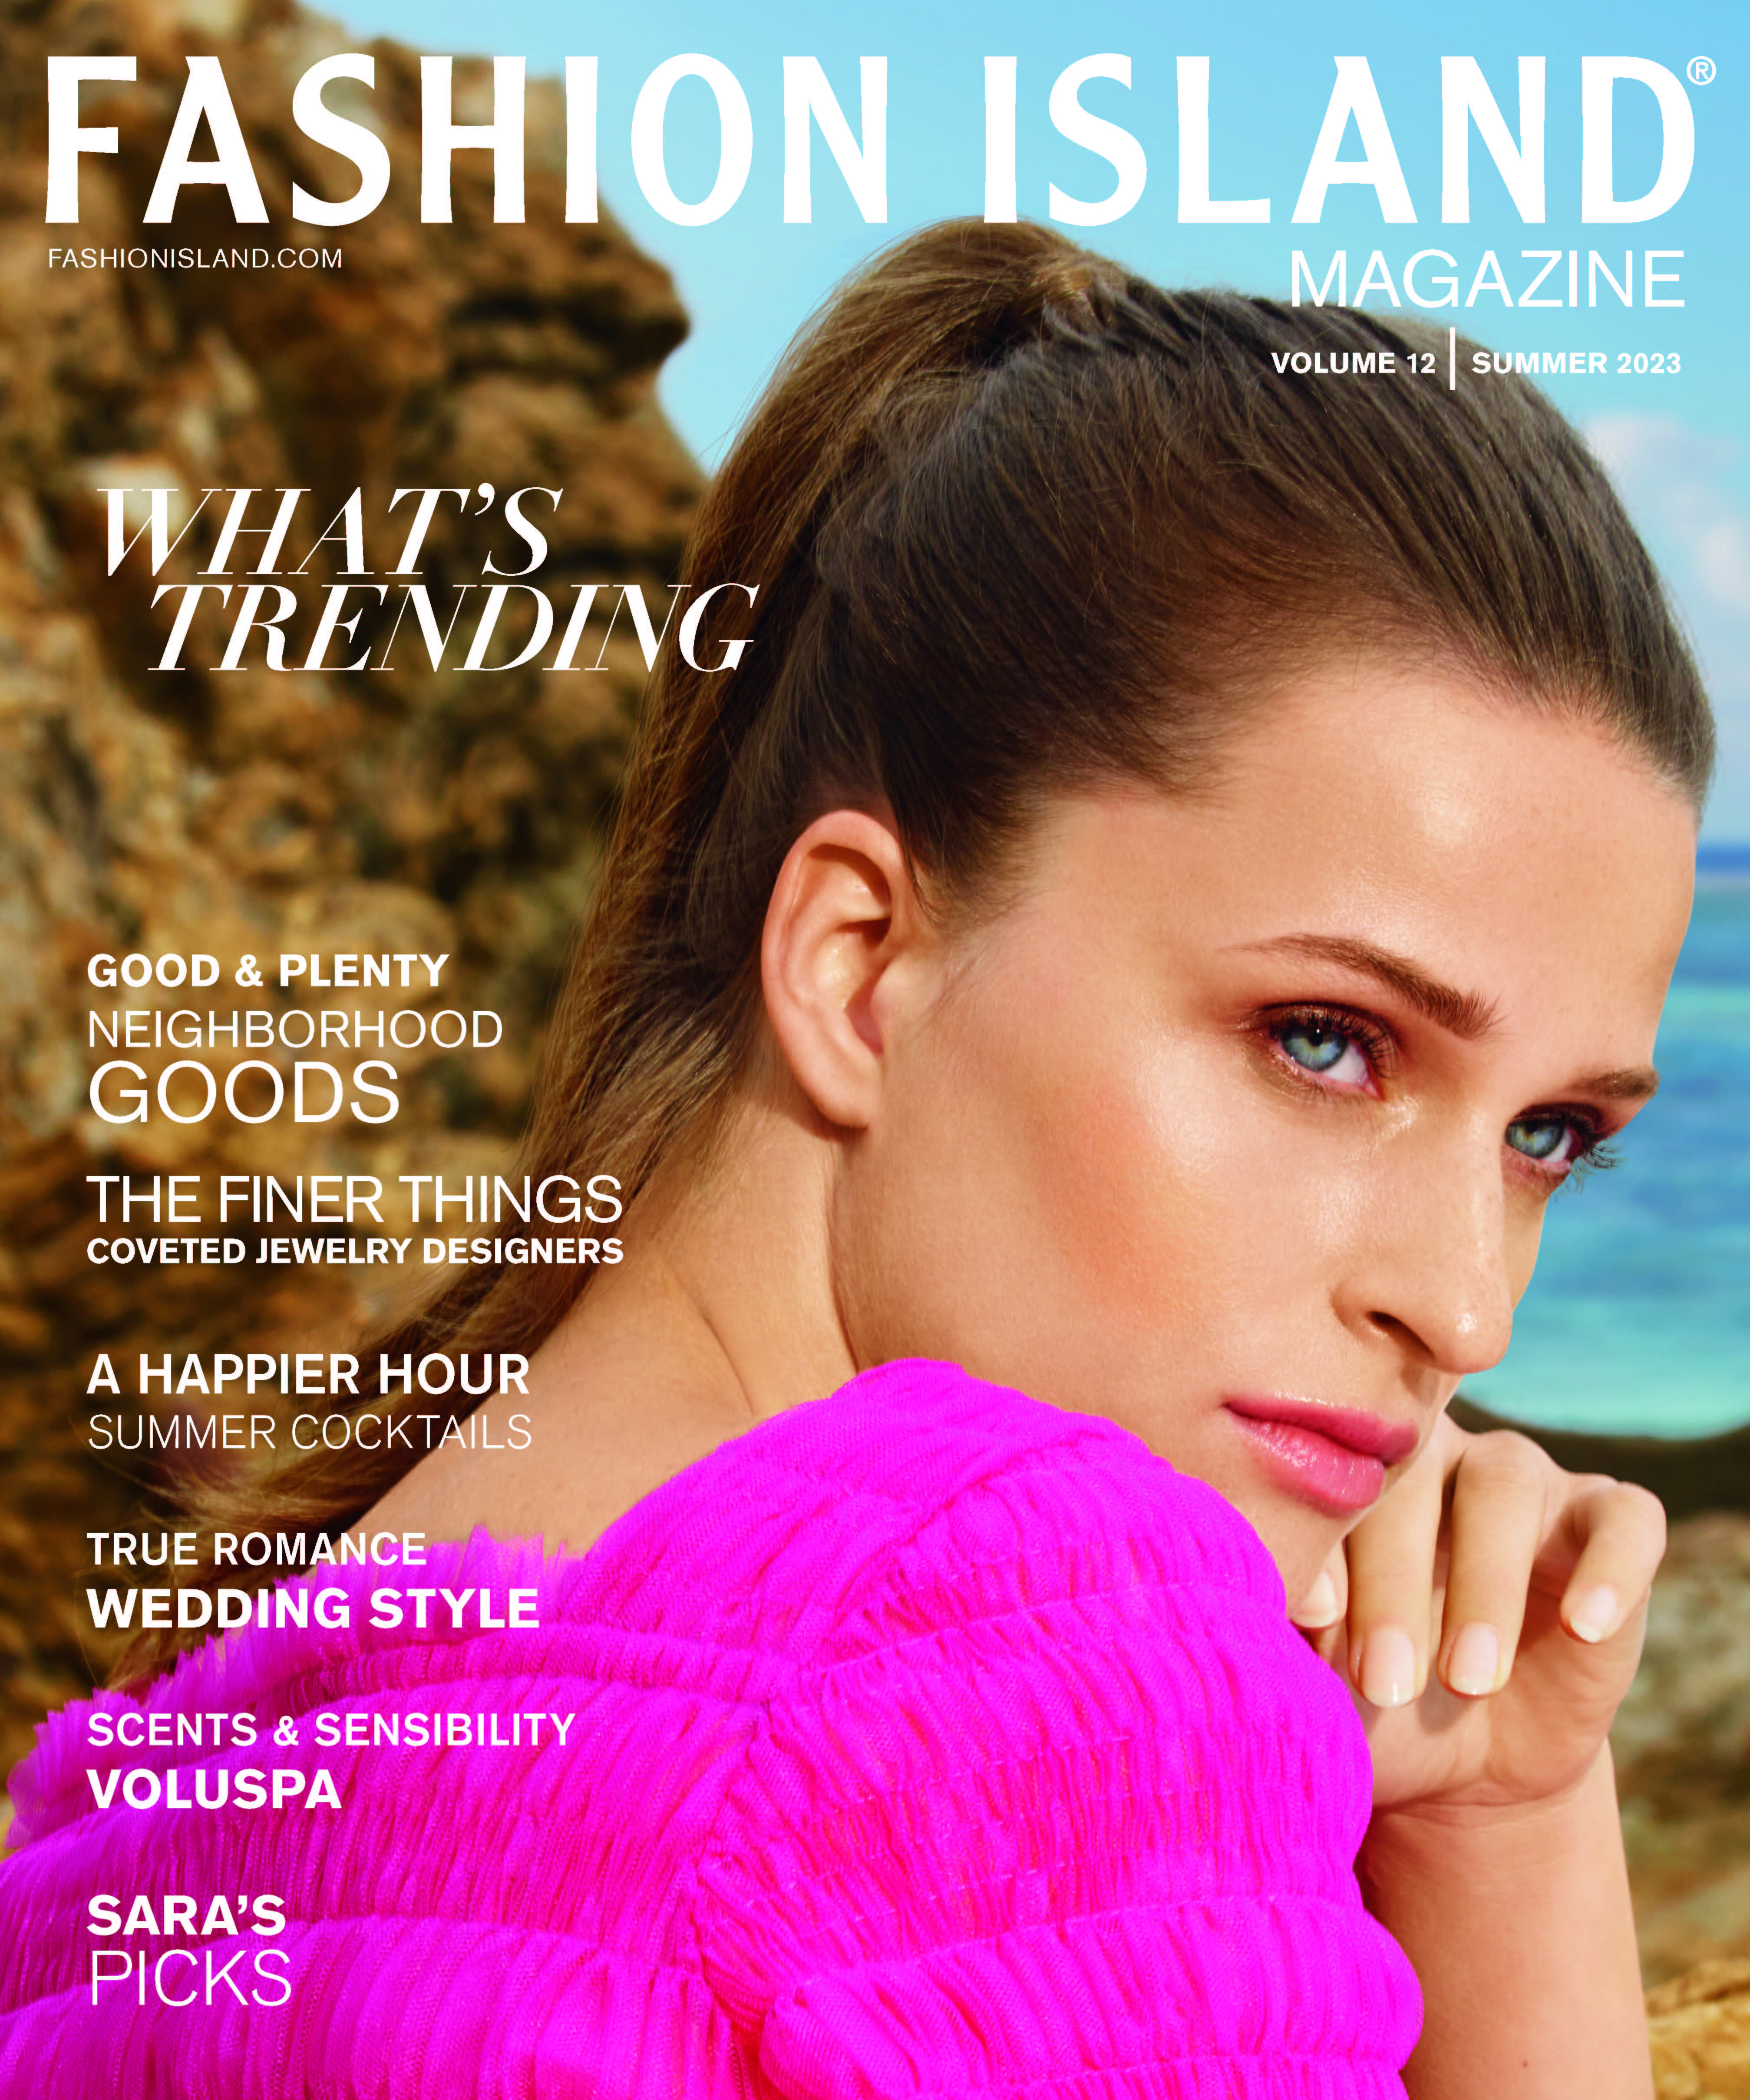 Fashion Island Magazine Summer 2023 Volume 12